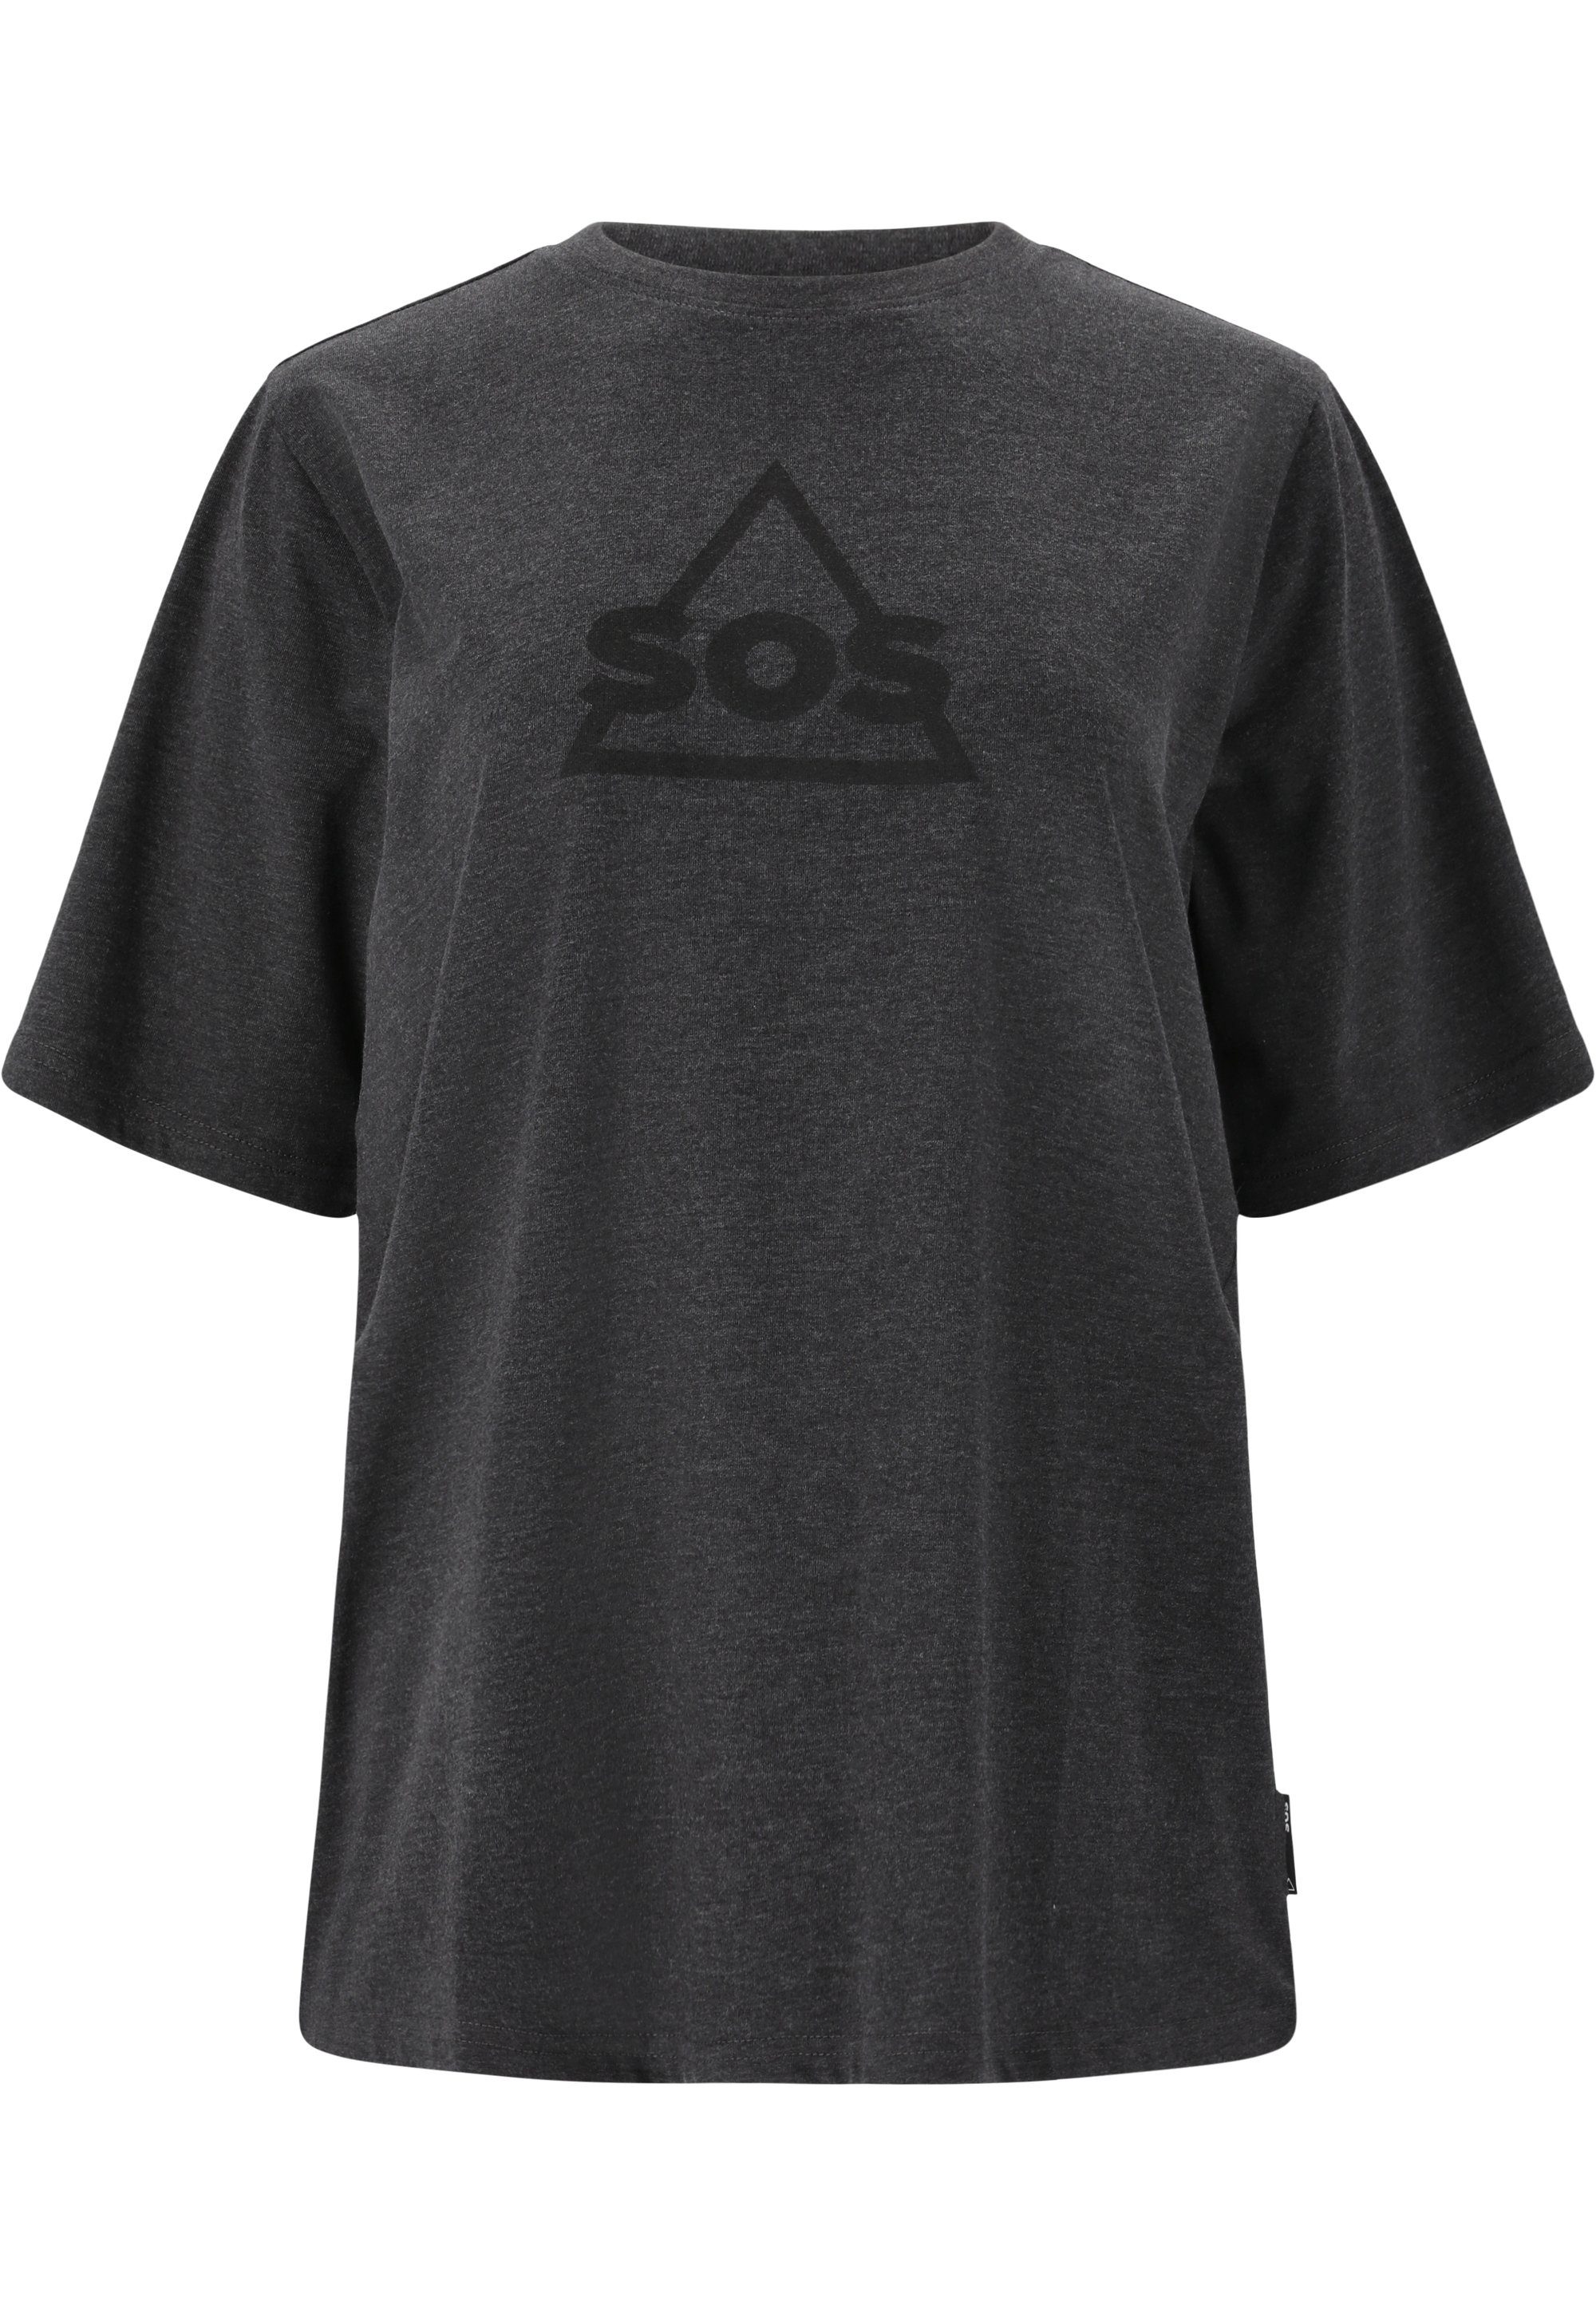 trendigem Front SOS Markenlogo Funktionsshirt mit der dunkelgrau Kvitfjell auf